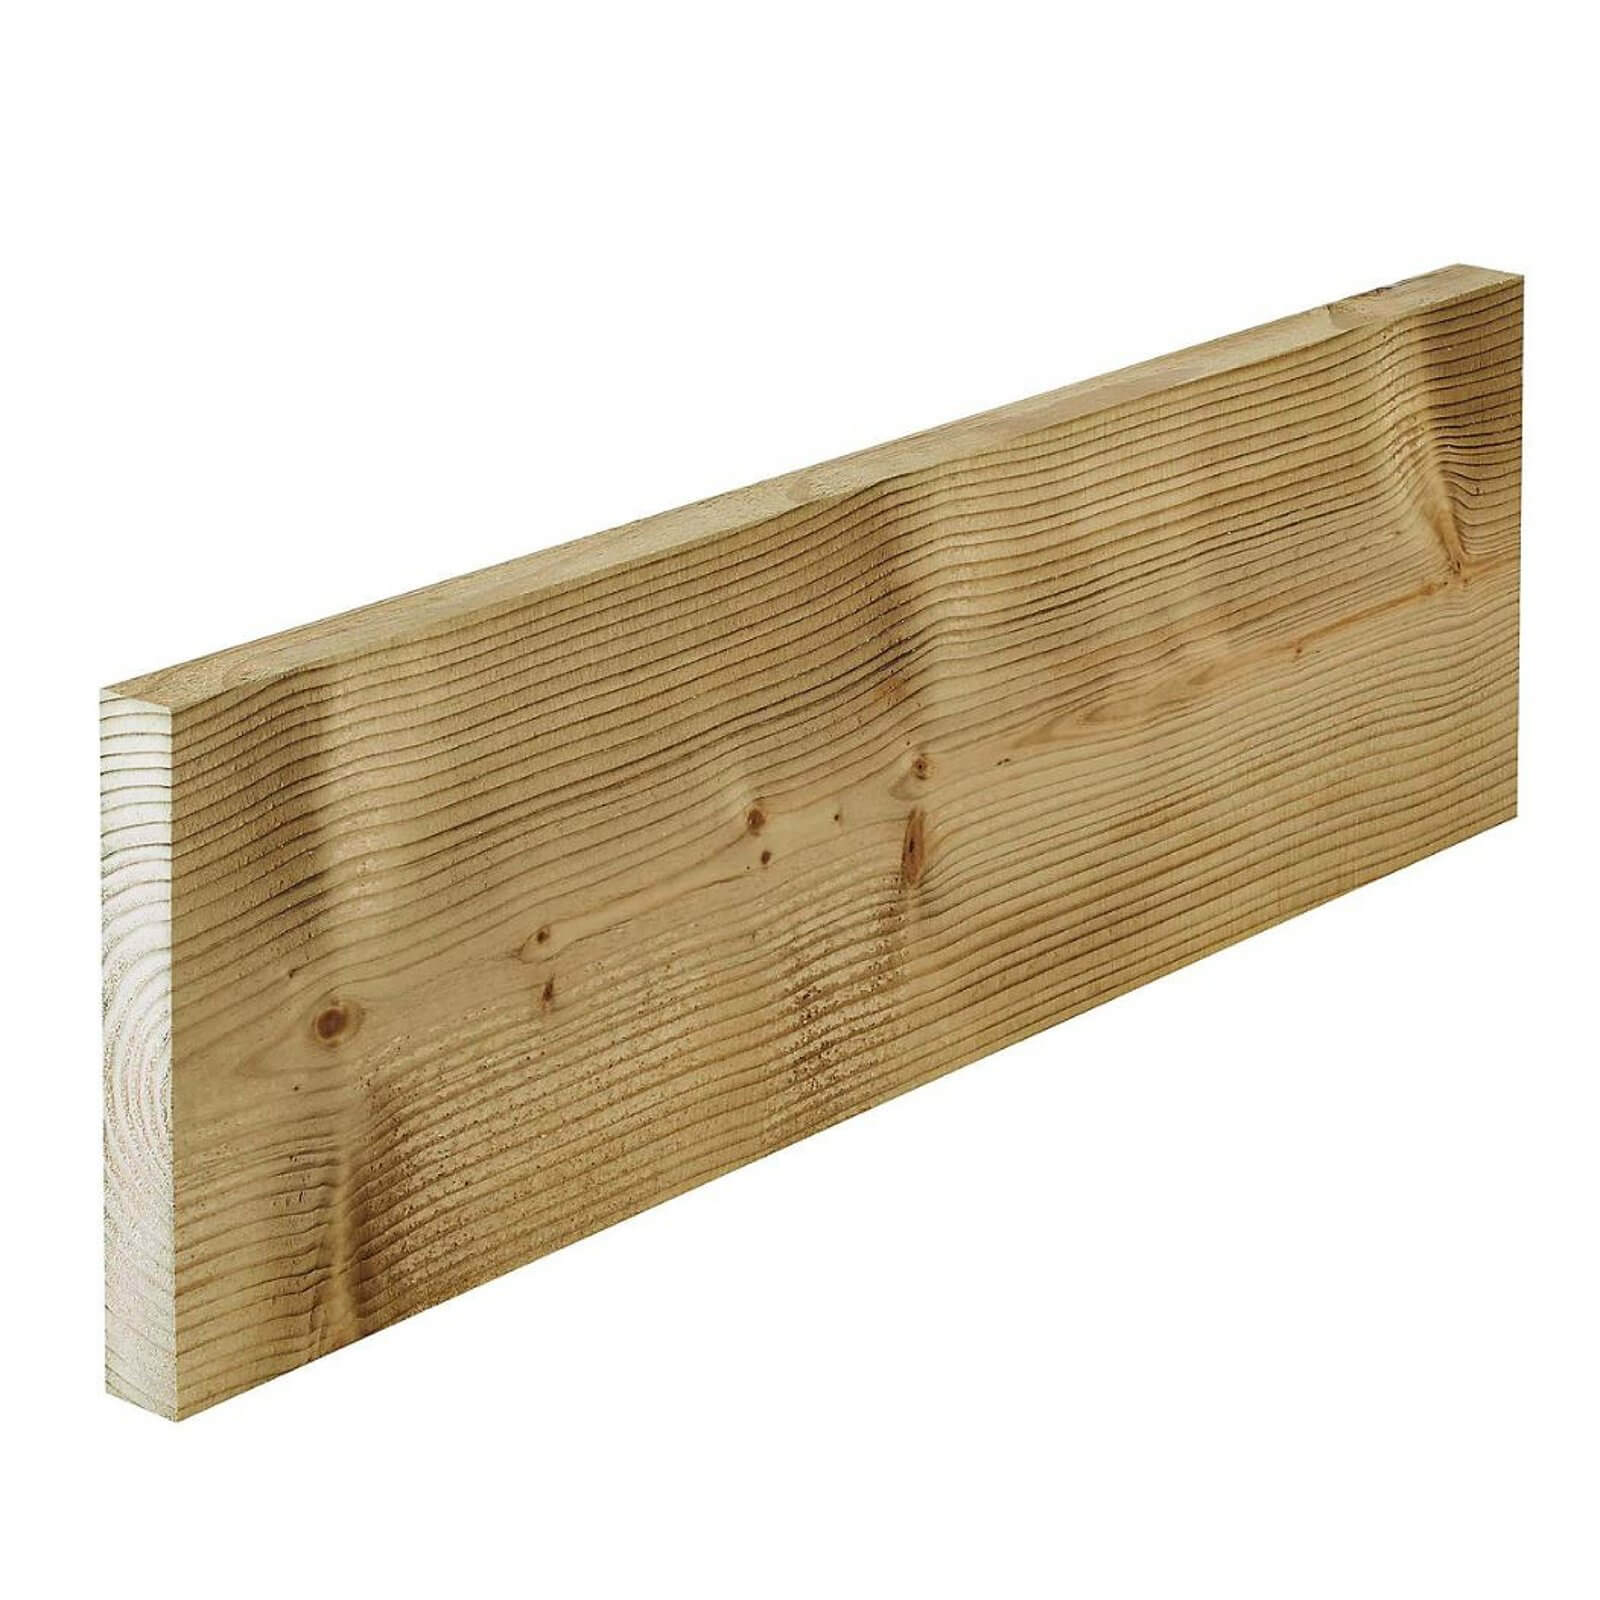 Metsa Sawn Treated Stick Softwood Timber 2.4m (22 x 144 x 2400mm)